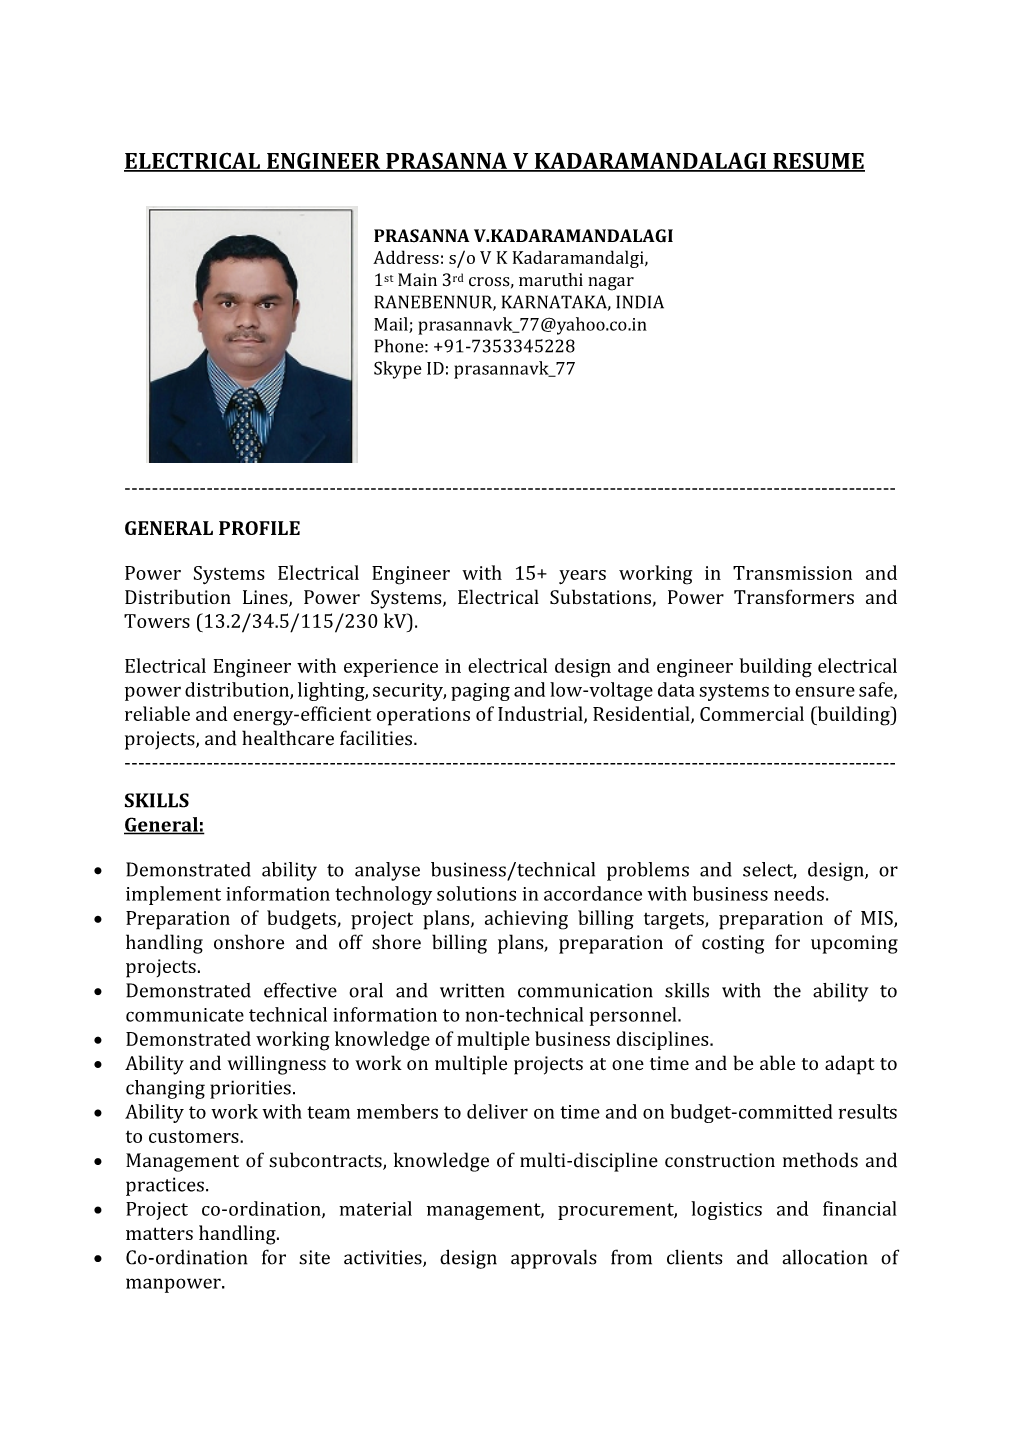 Electrical Engineer Prasanna V Kadaramandalagi Resume